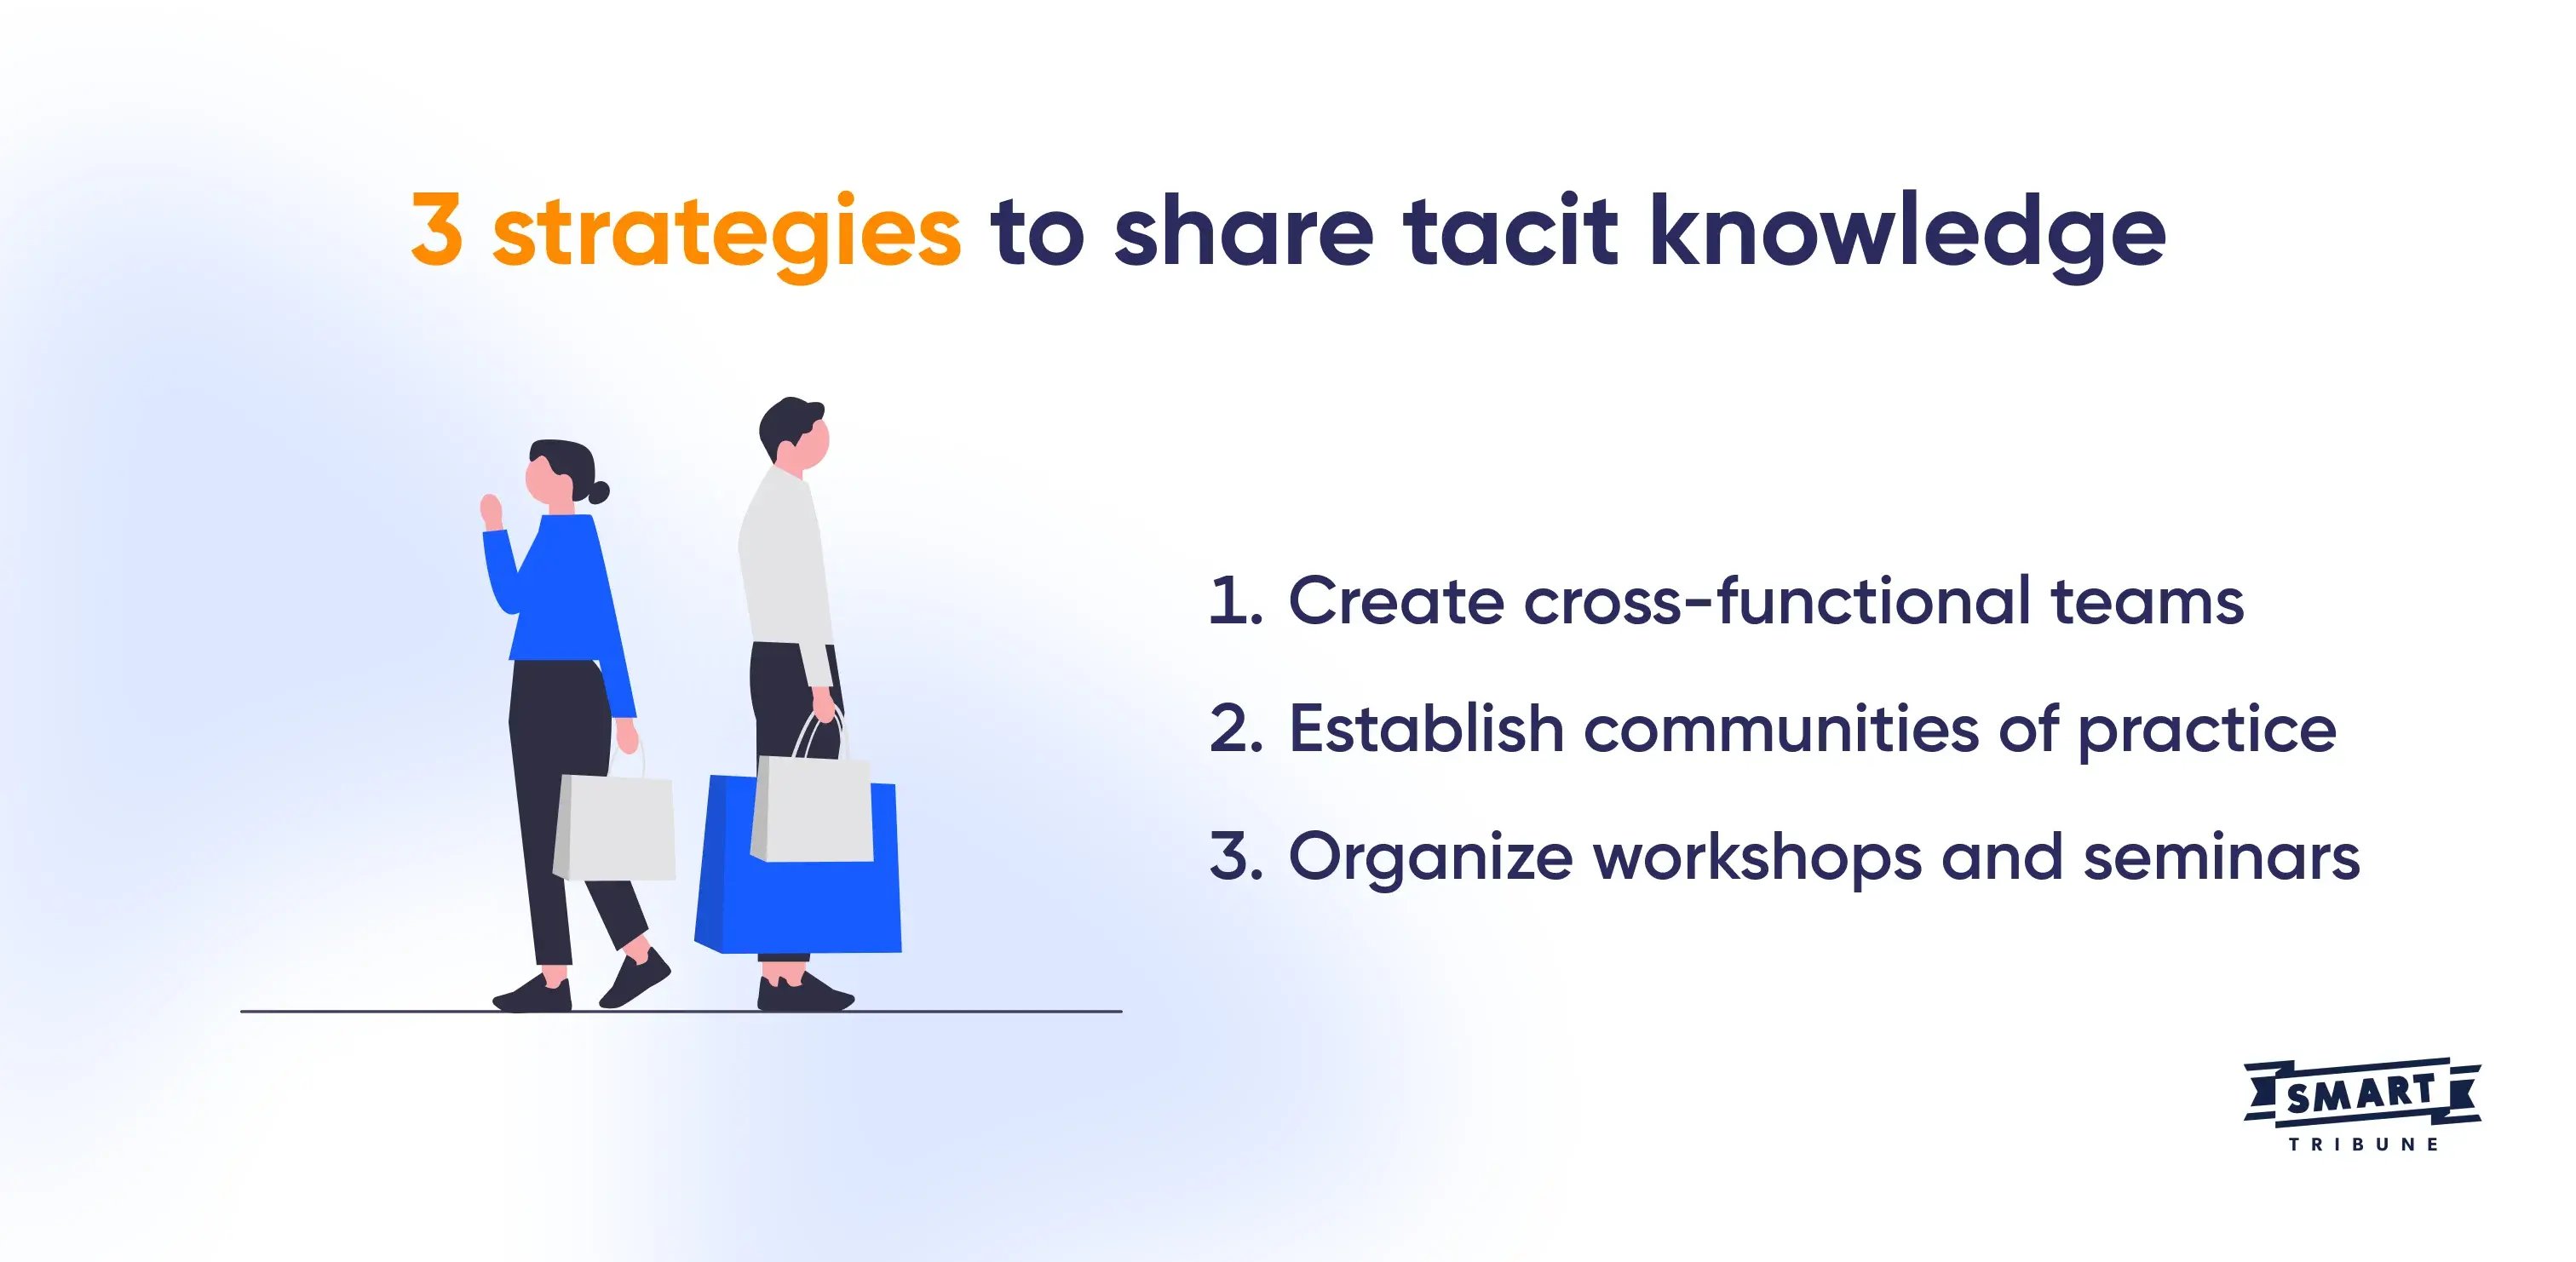 Strategies to share tacit knowledge